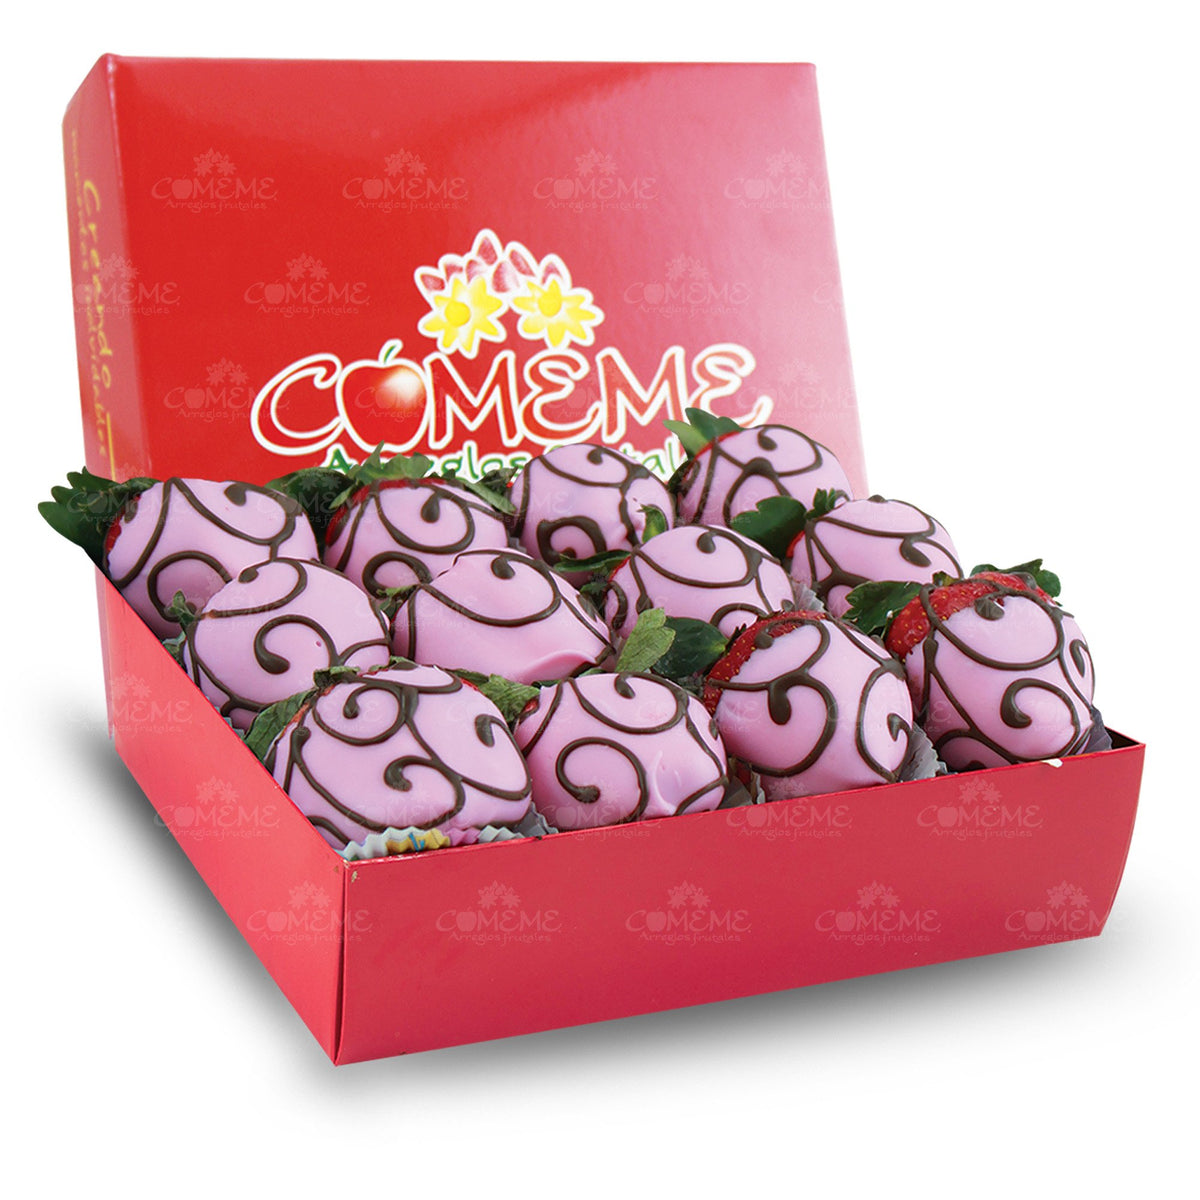 Caja Frutales - Choco Rosas con Grecas - Caja Comeme - Comeme